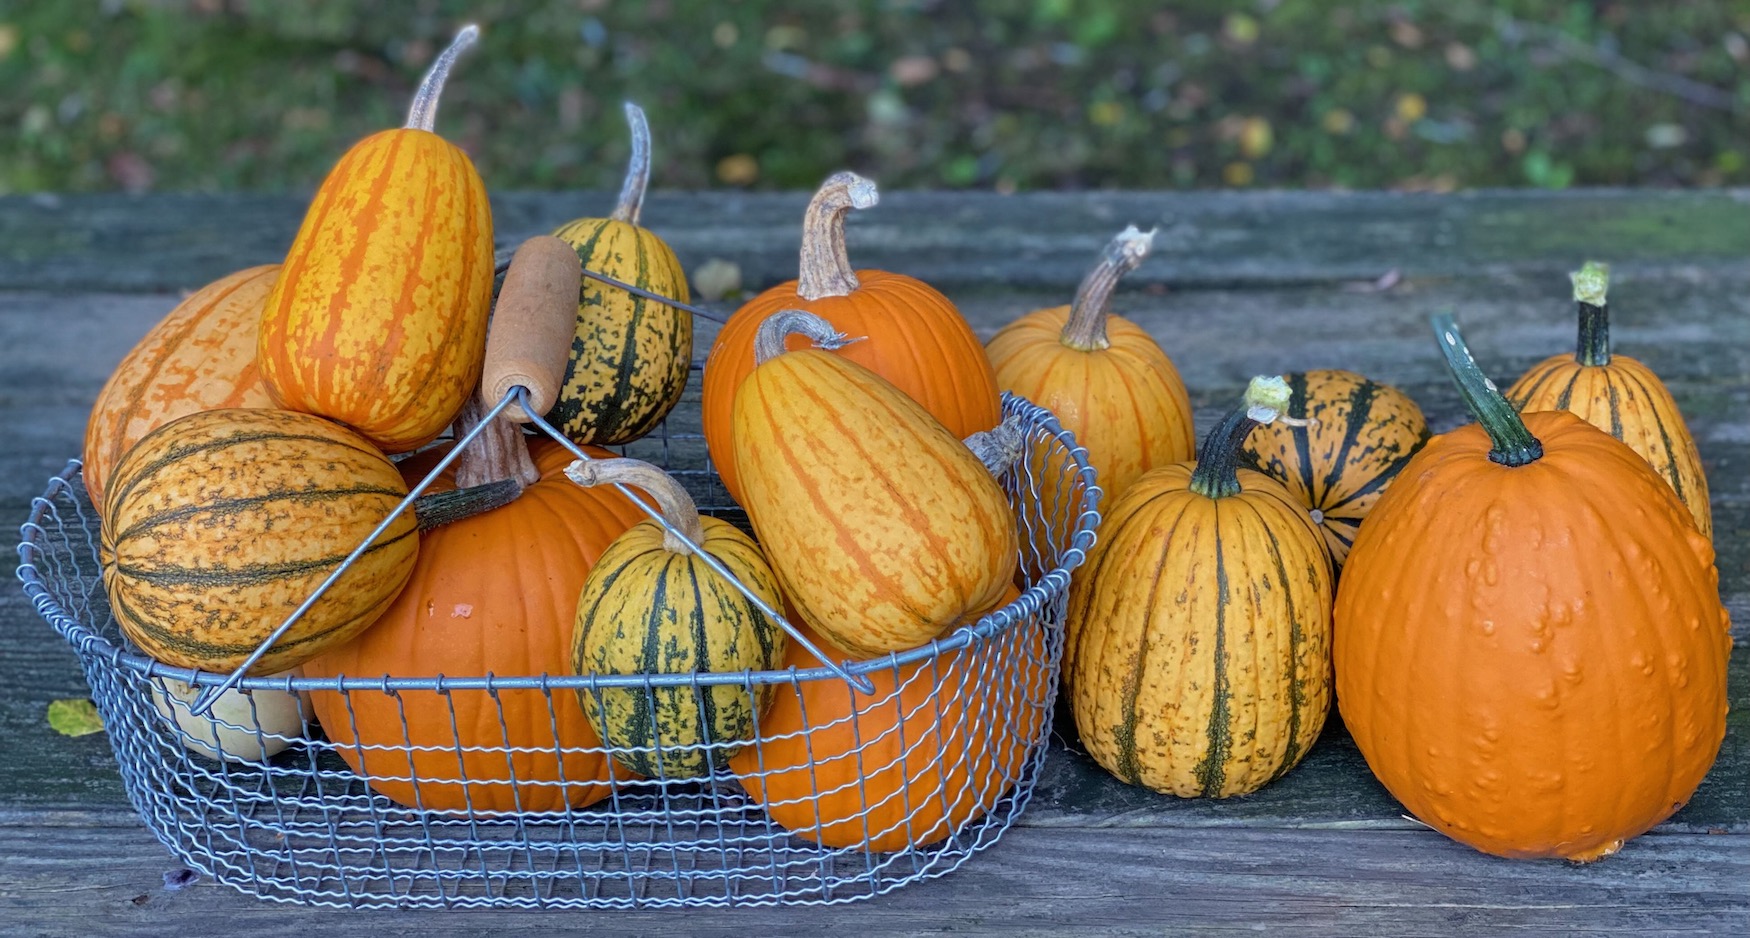 Garden Harvested Pumpkins and Squash, Fall Recipes